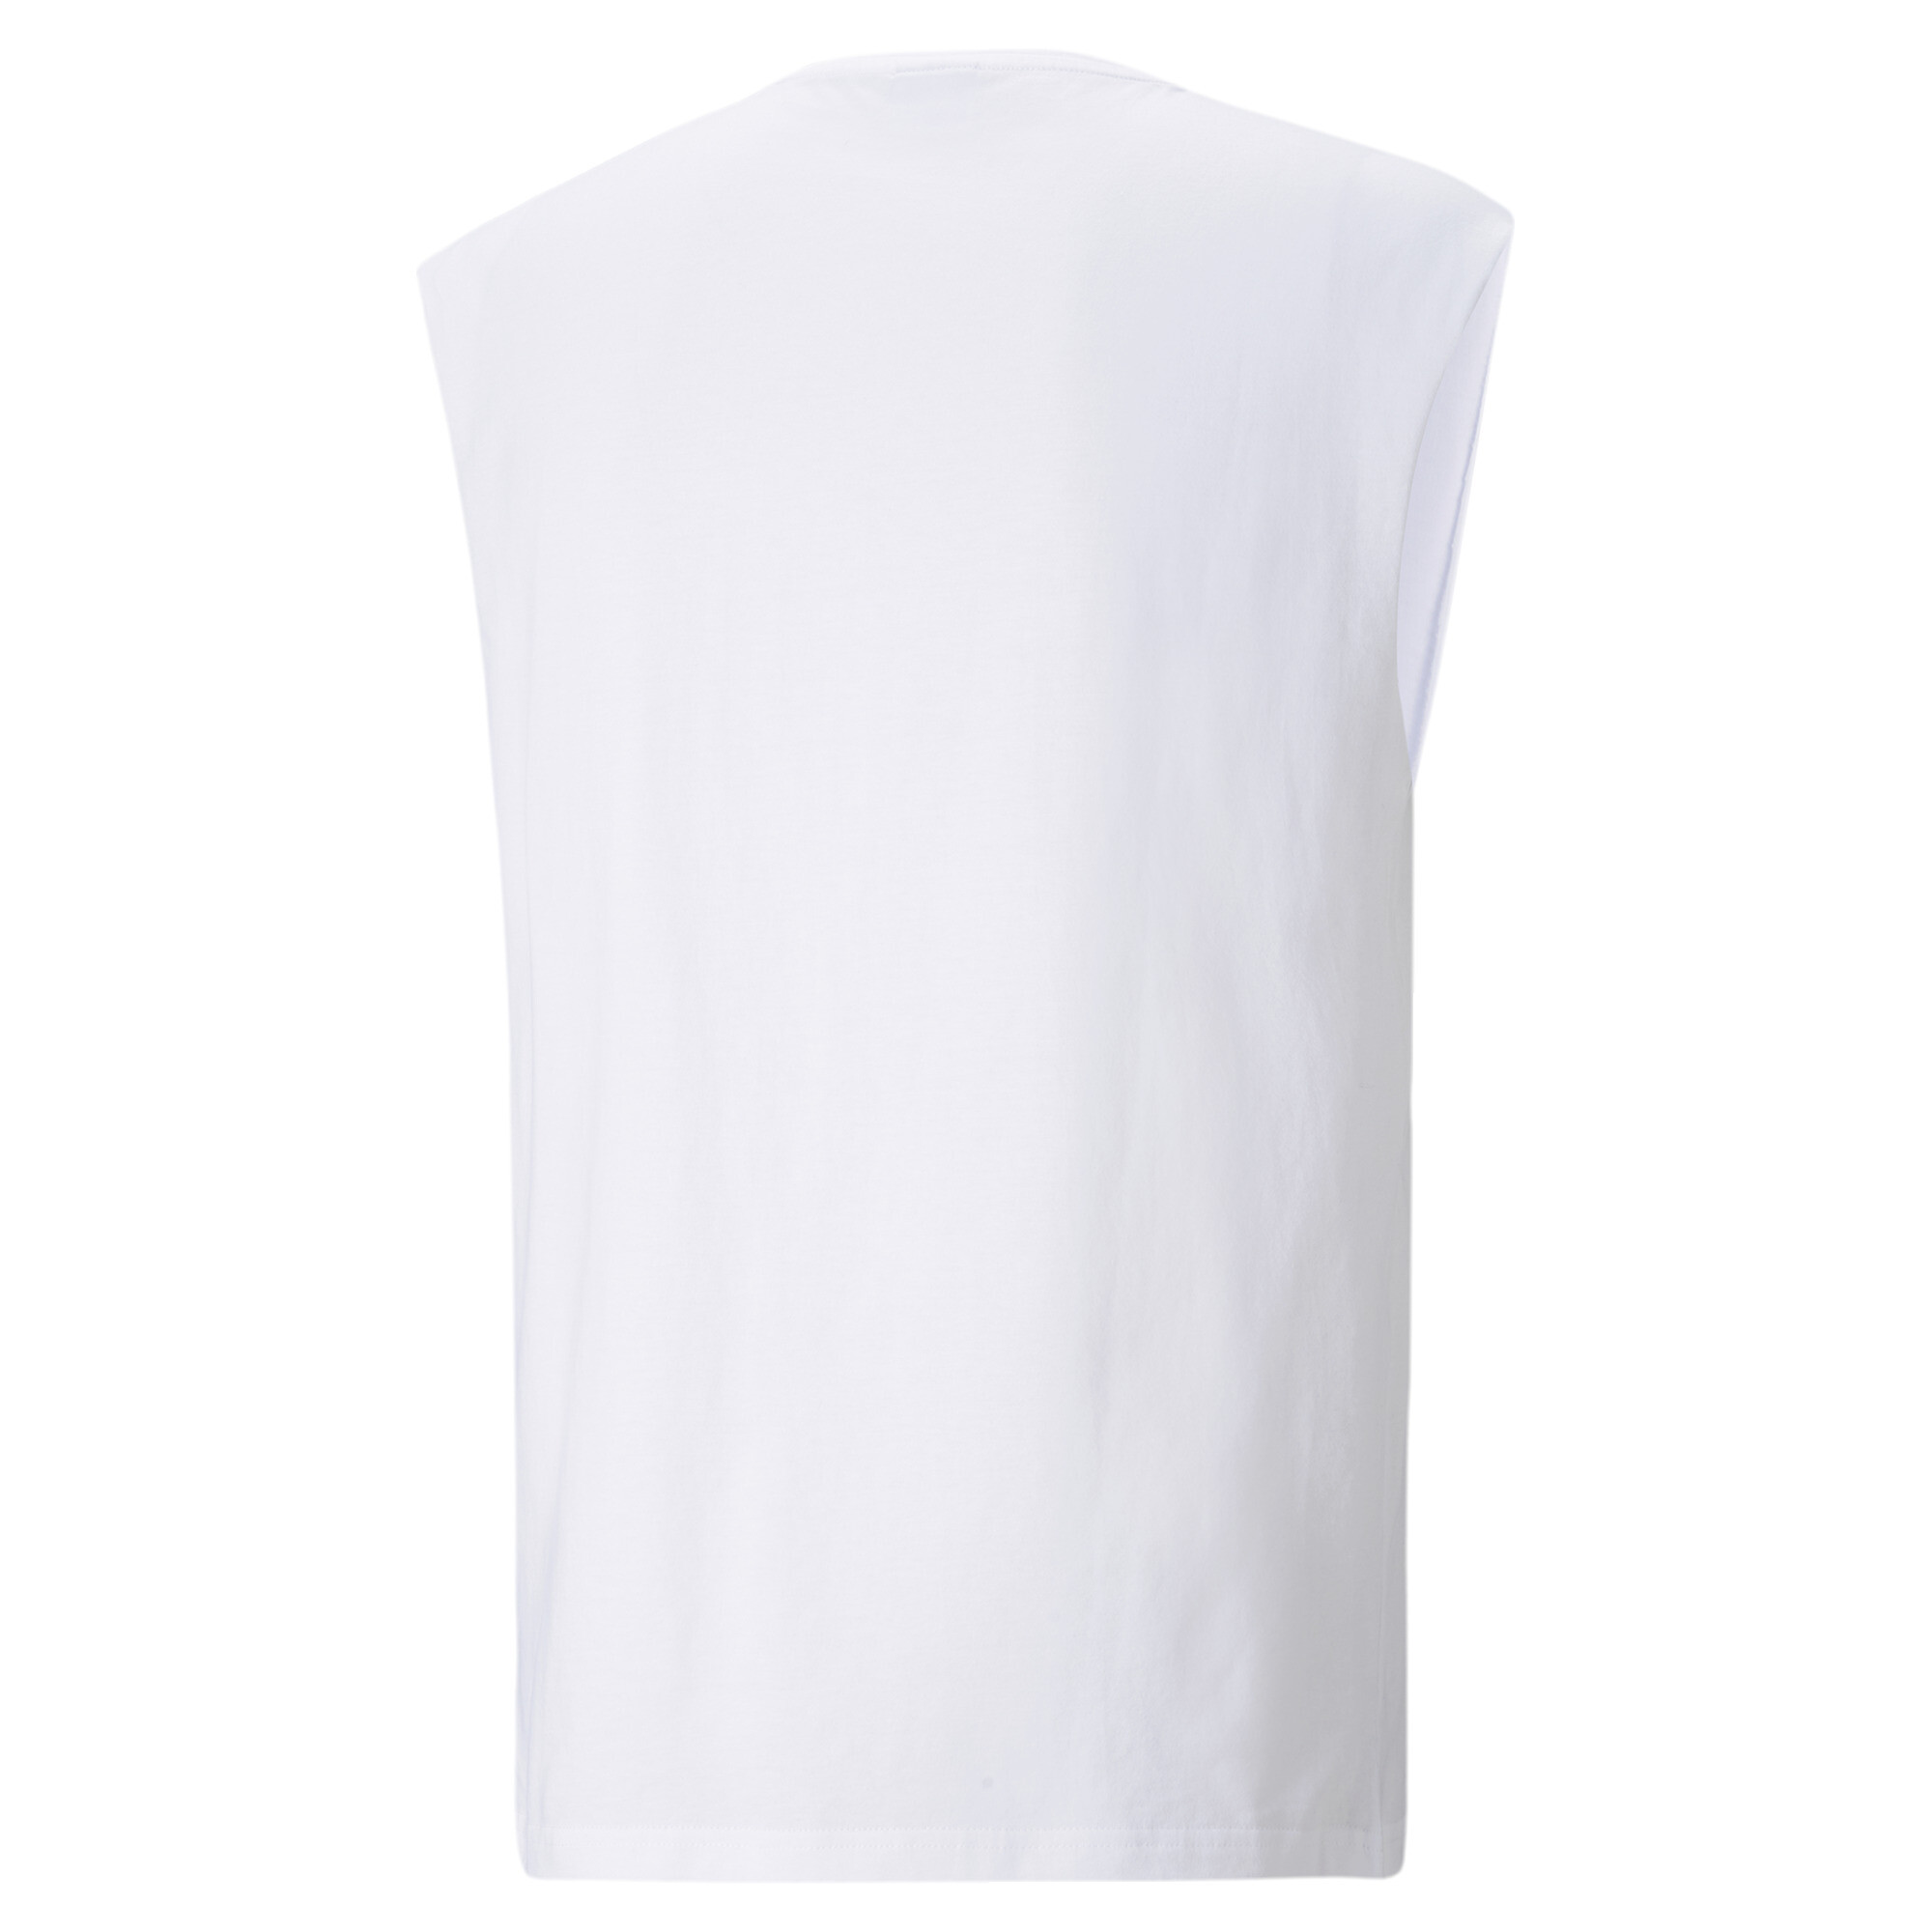 Men's Puma Statement Sleeveless's T-Shirt, White, Size M, Clothing